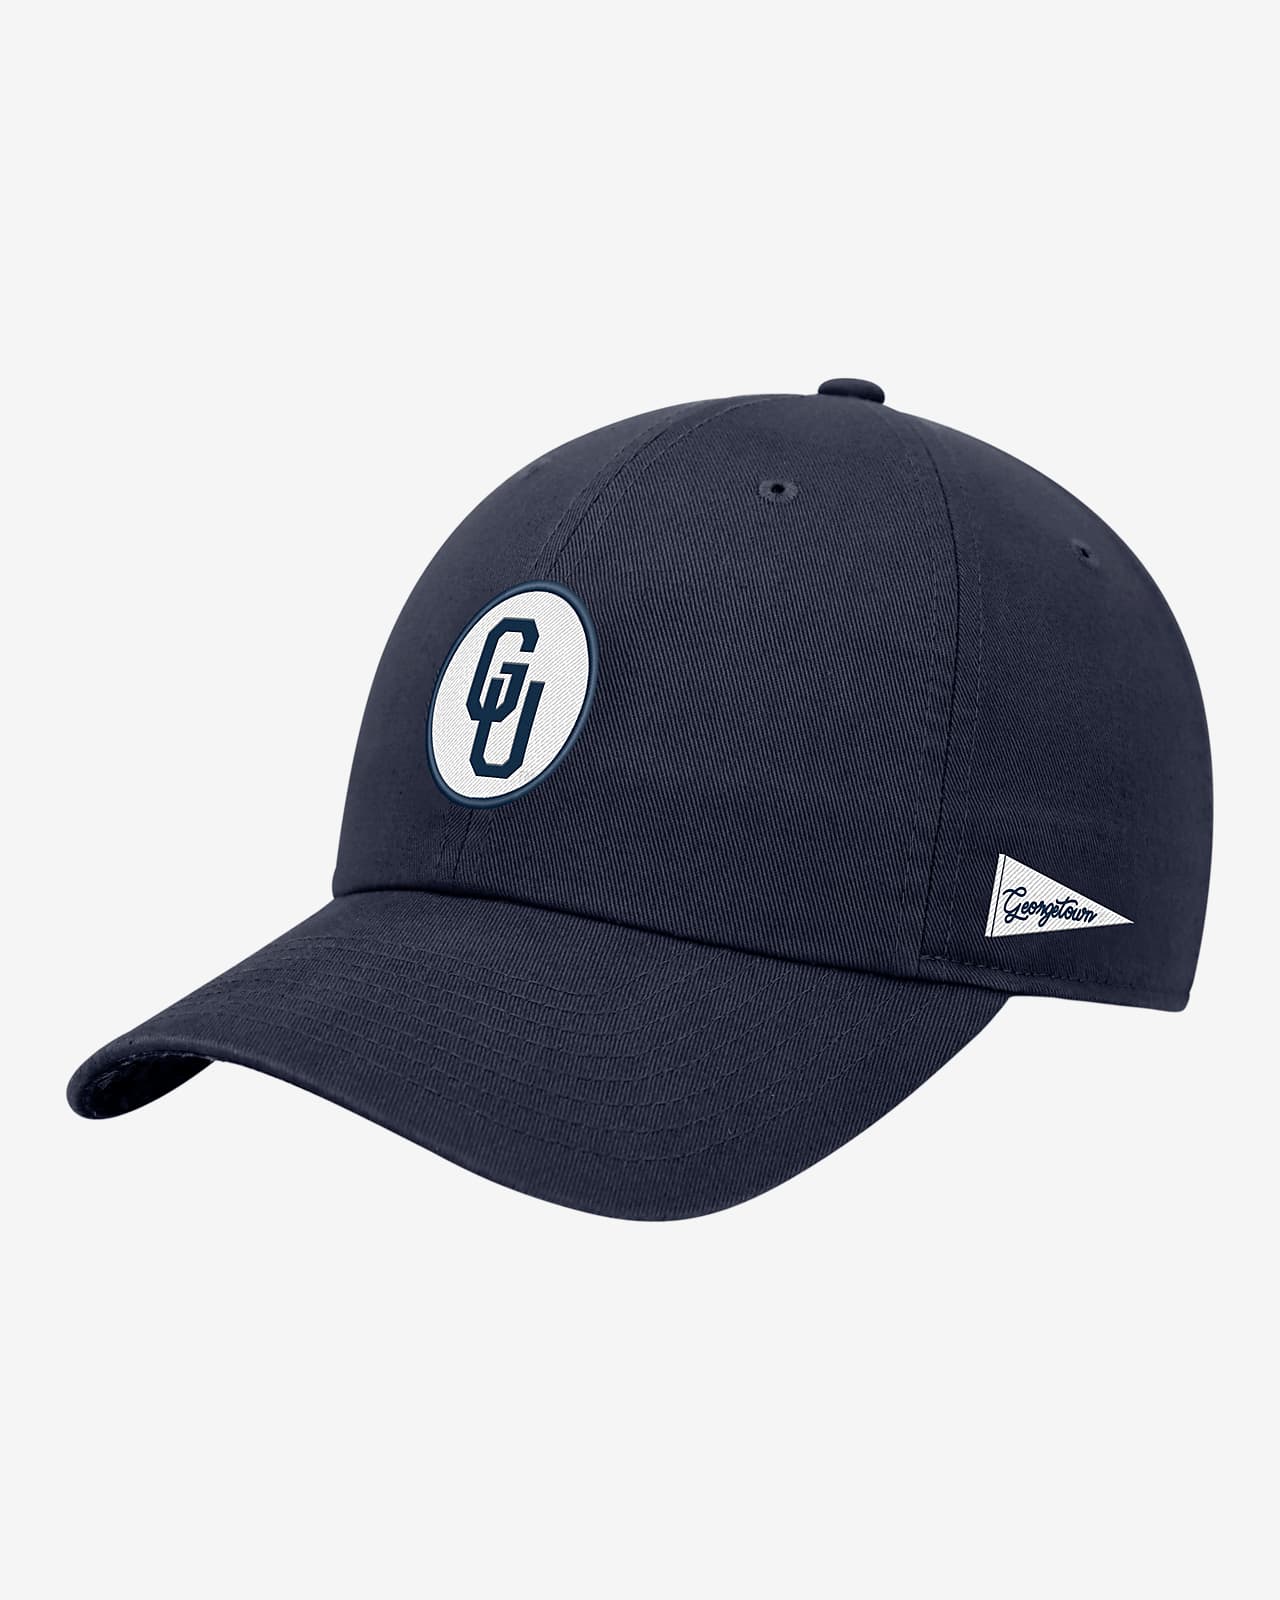 Gorra universitaria ajustable Nike con logotipo de Georgetown